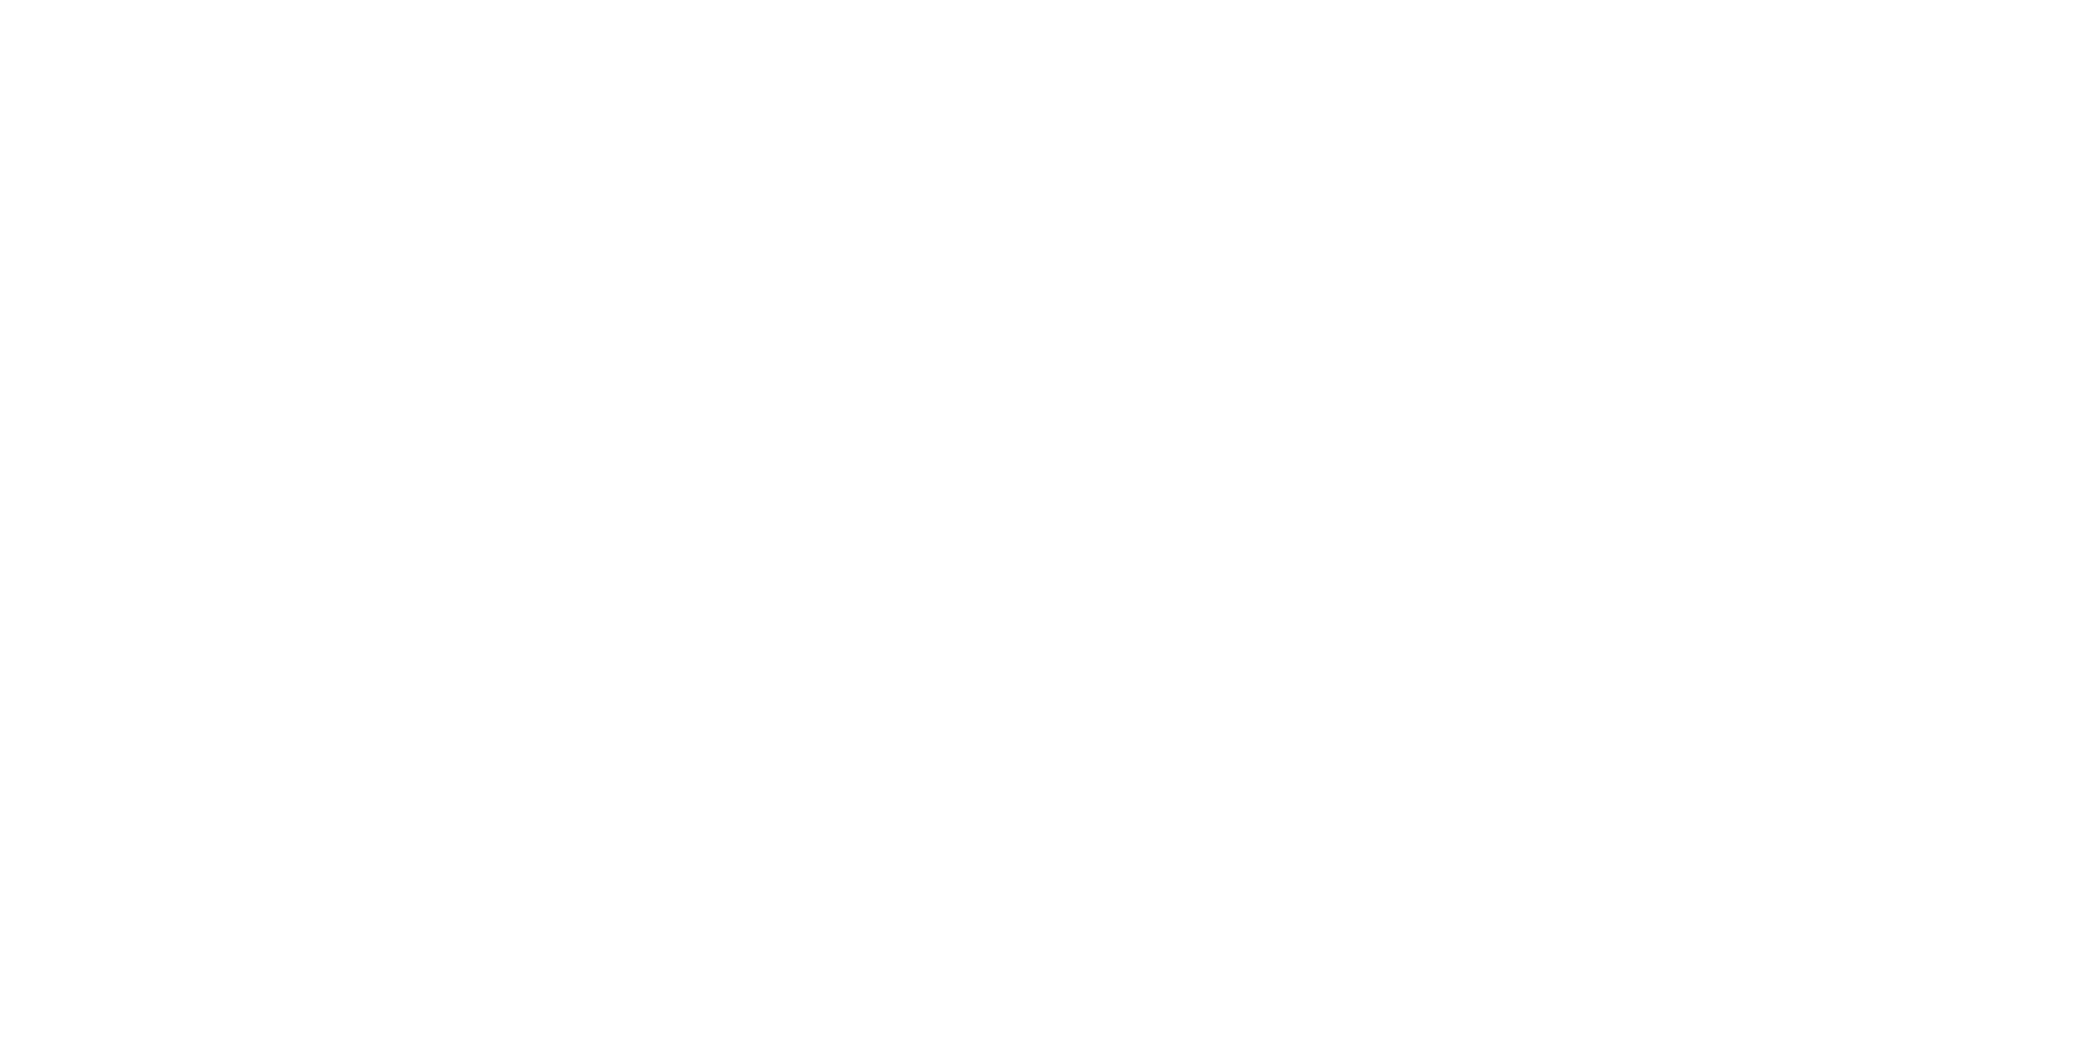 Declet Designs website design branding for private practice